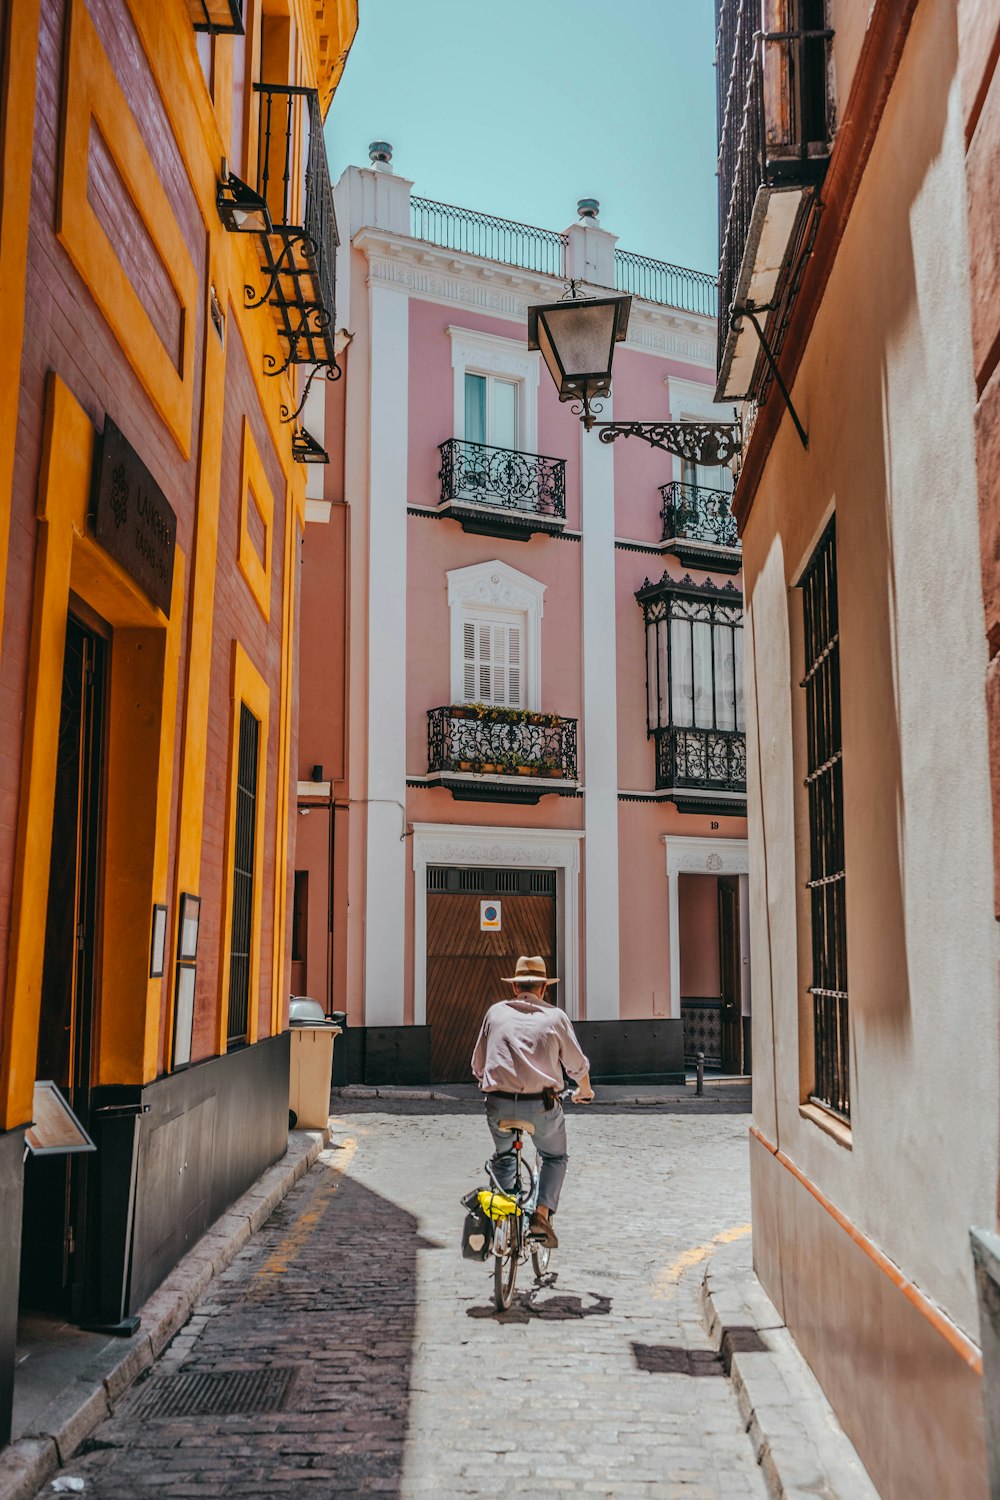 Persona en bicicleta entre edificios